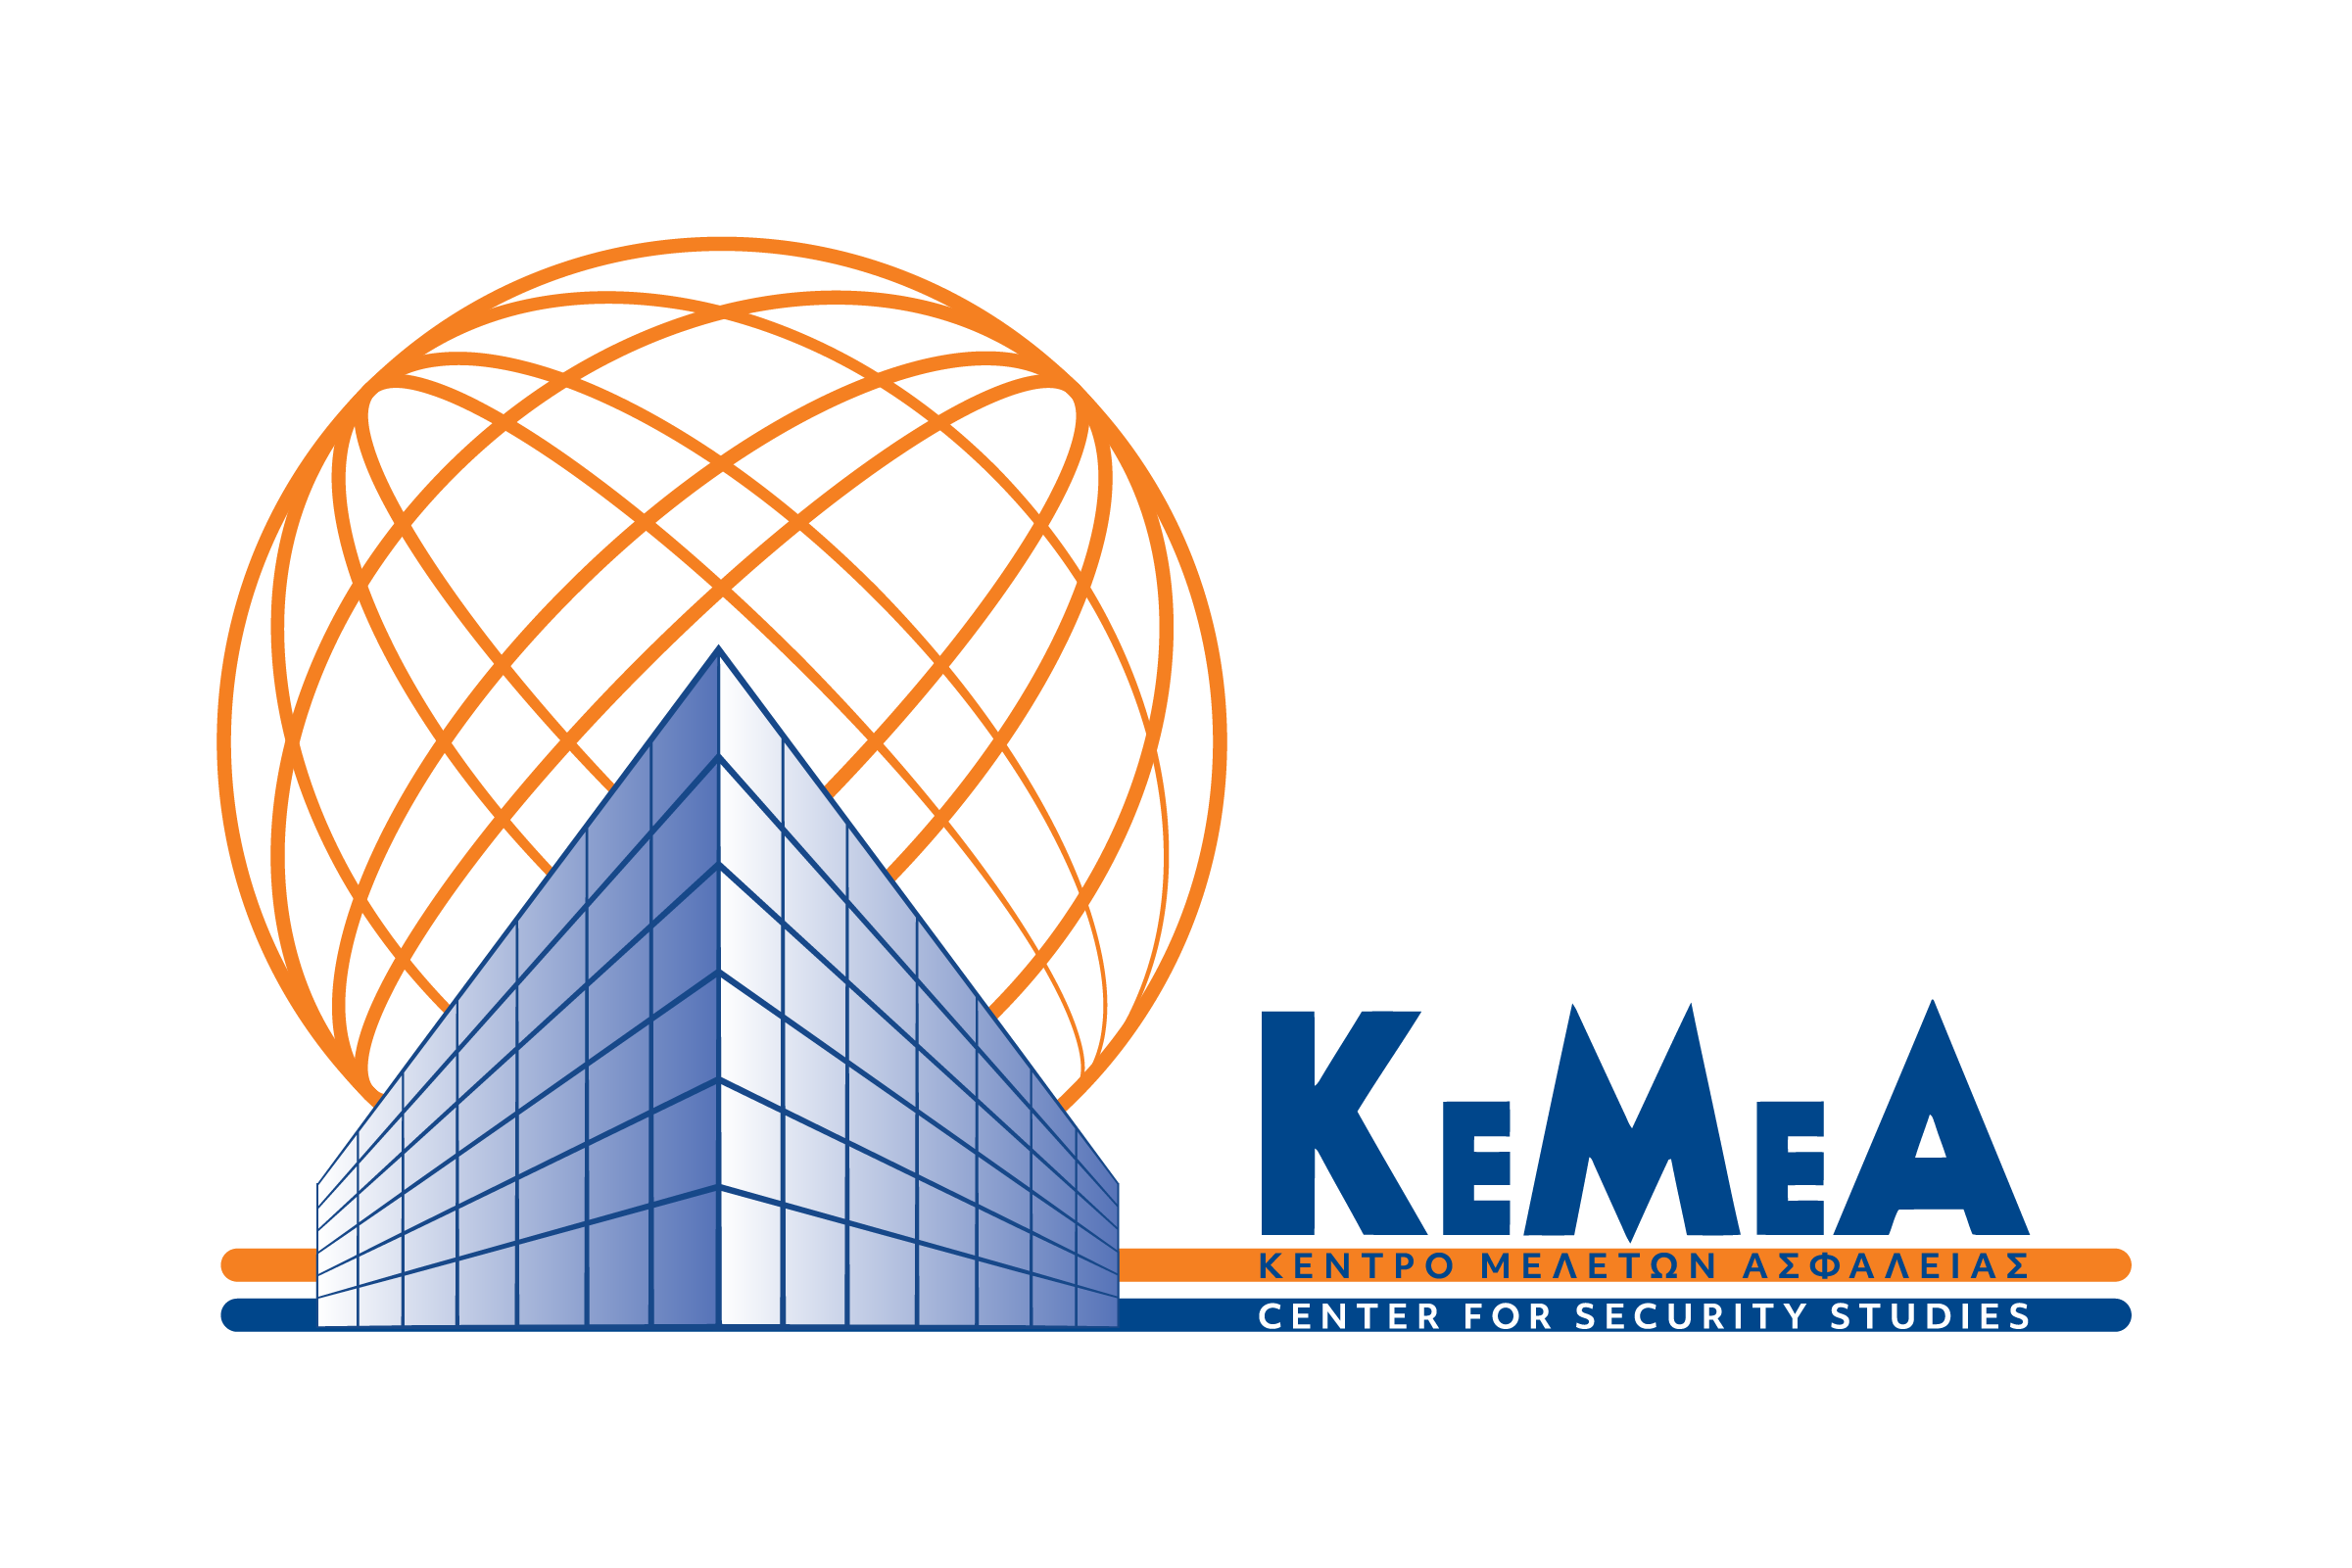 Center for Security Studies (Kemea)